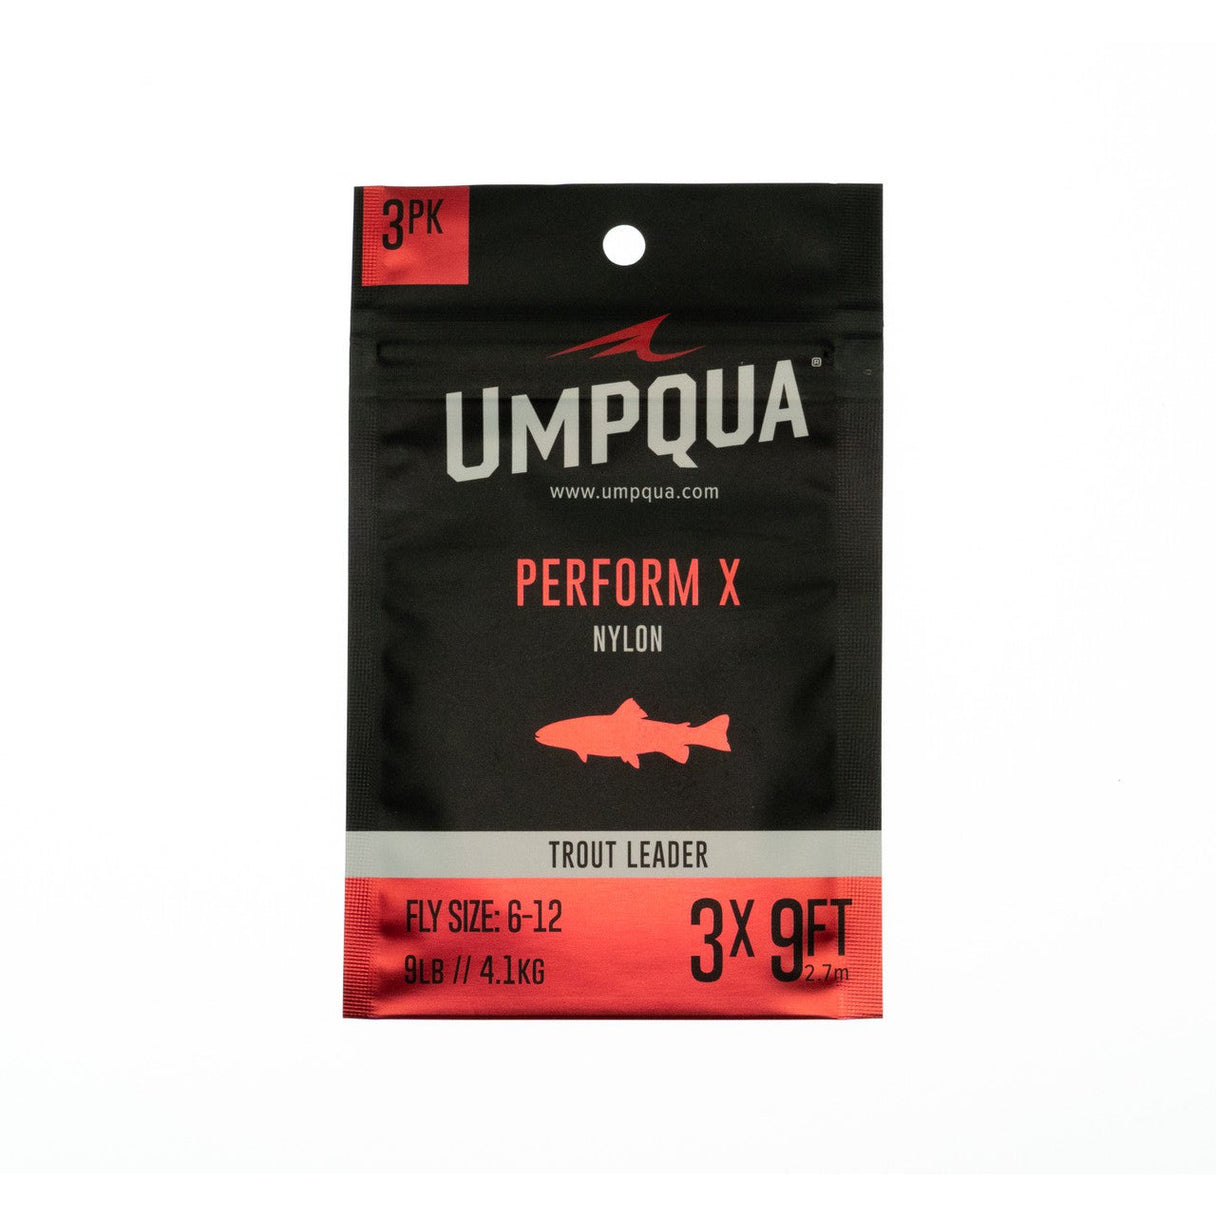 Umpqua Perform X 9' Trout Leaders (3 Pack)